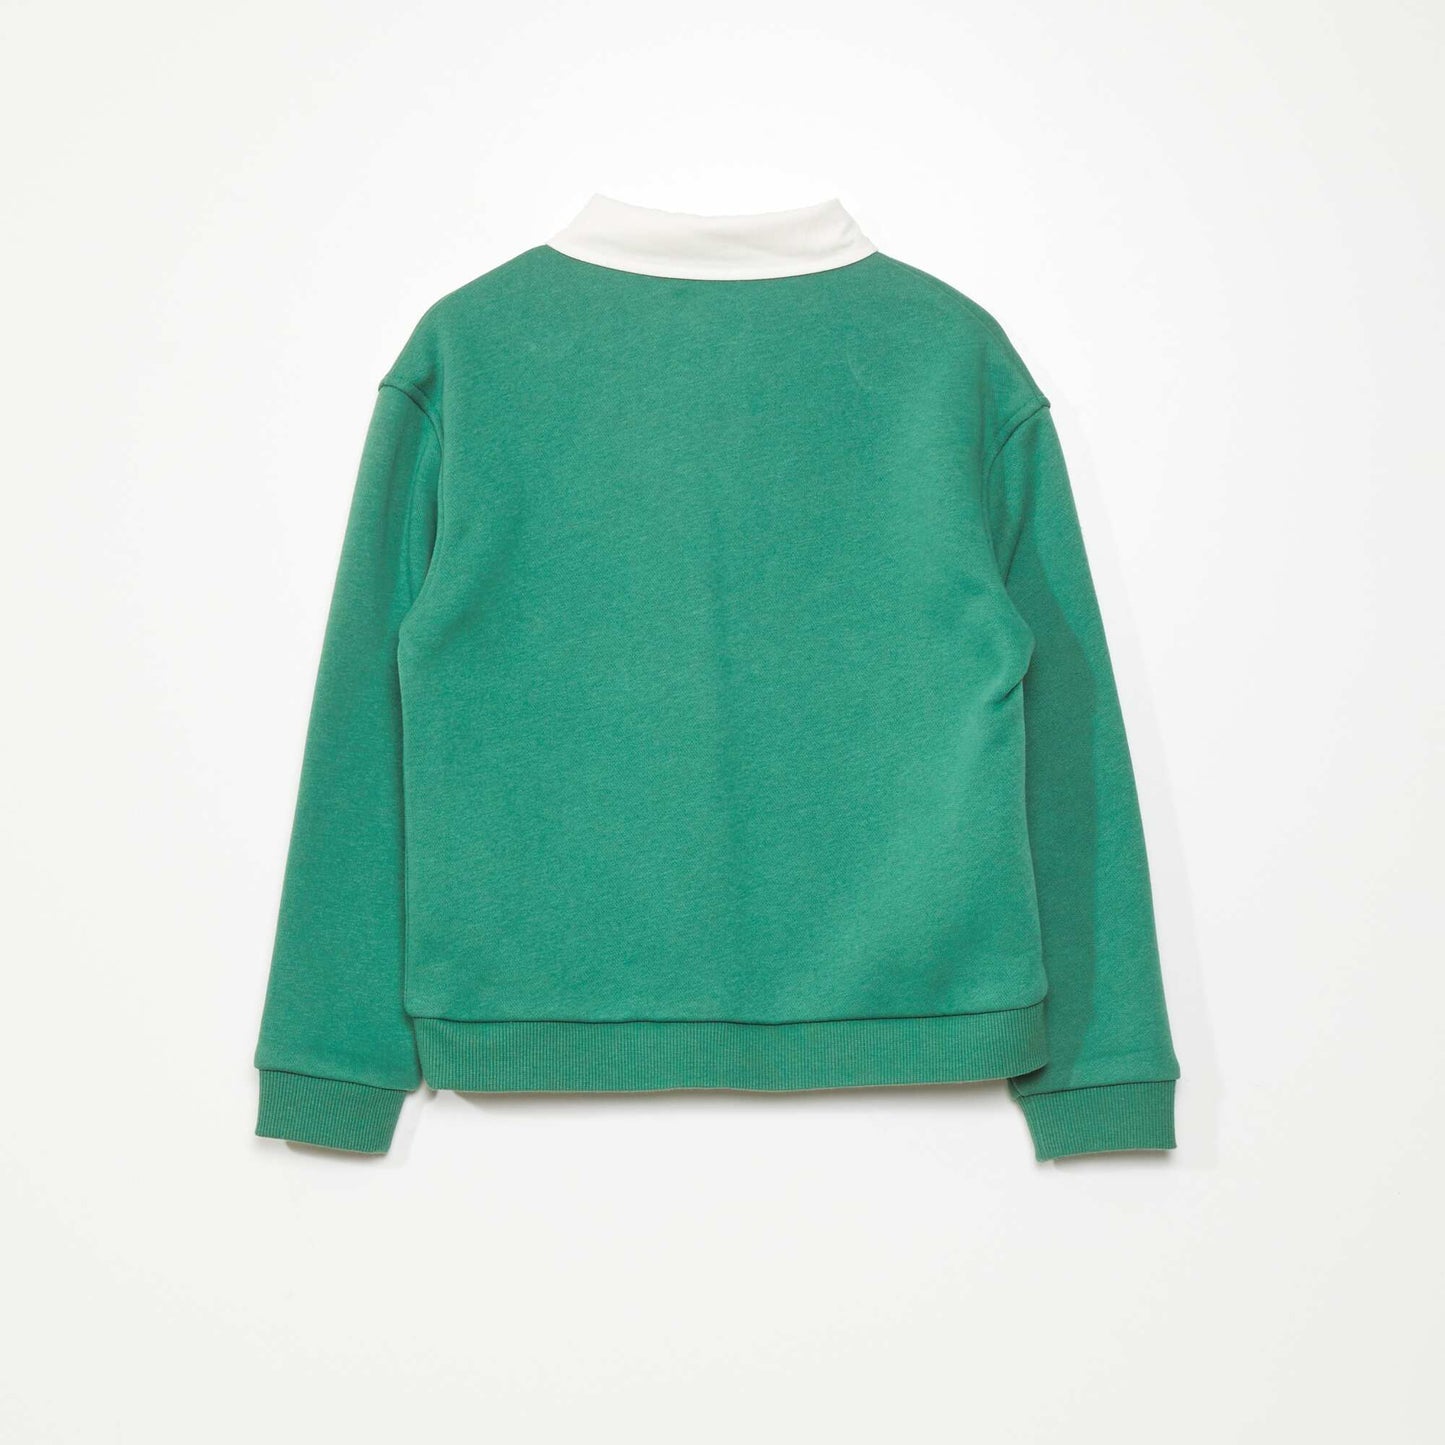 Sweatshirt fabric sweater with polo collar Green